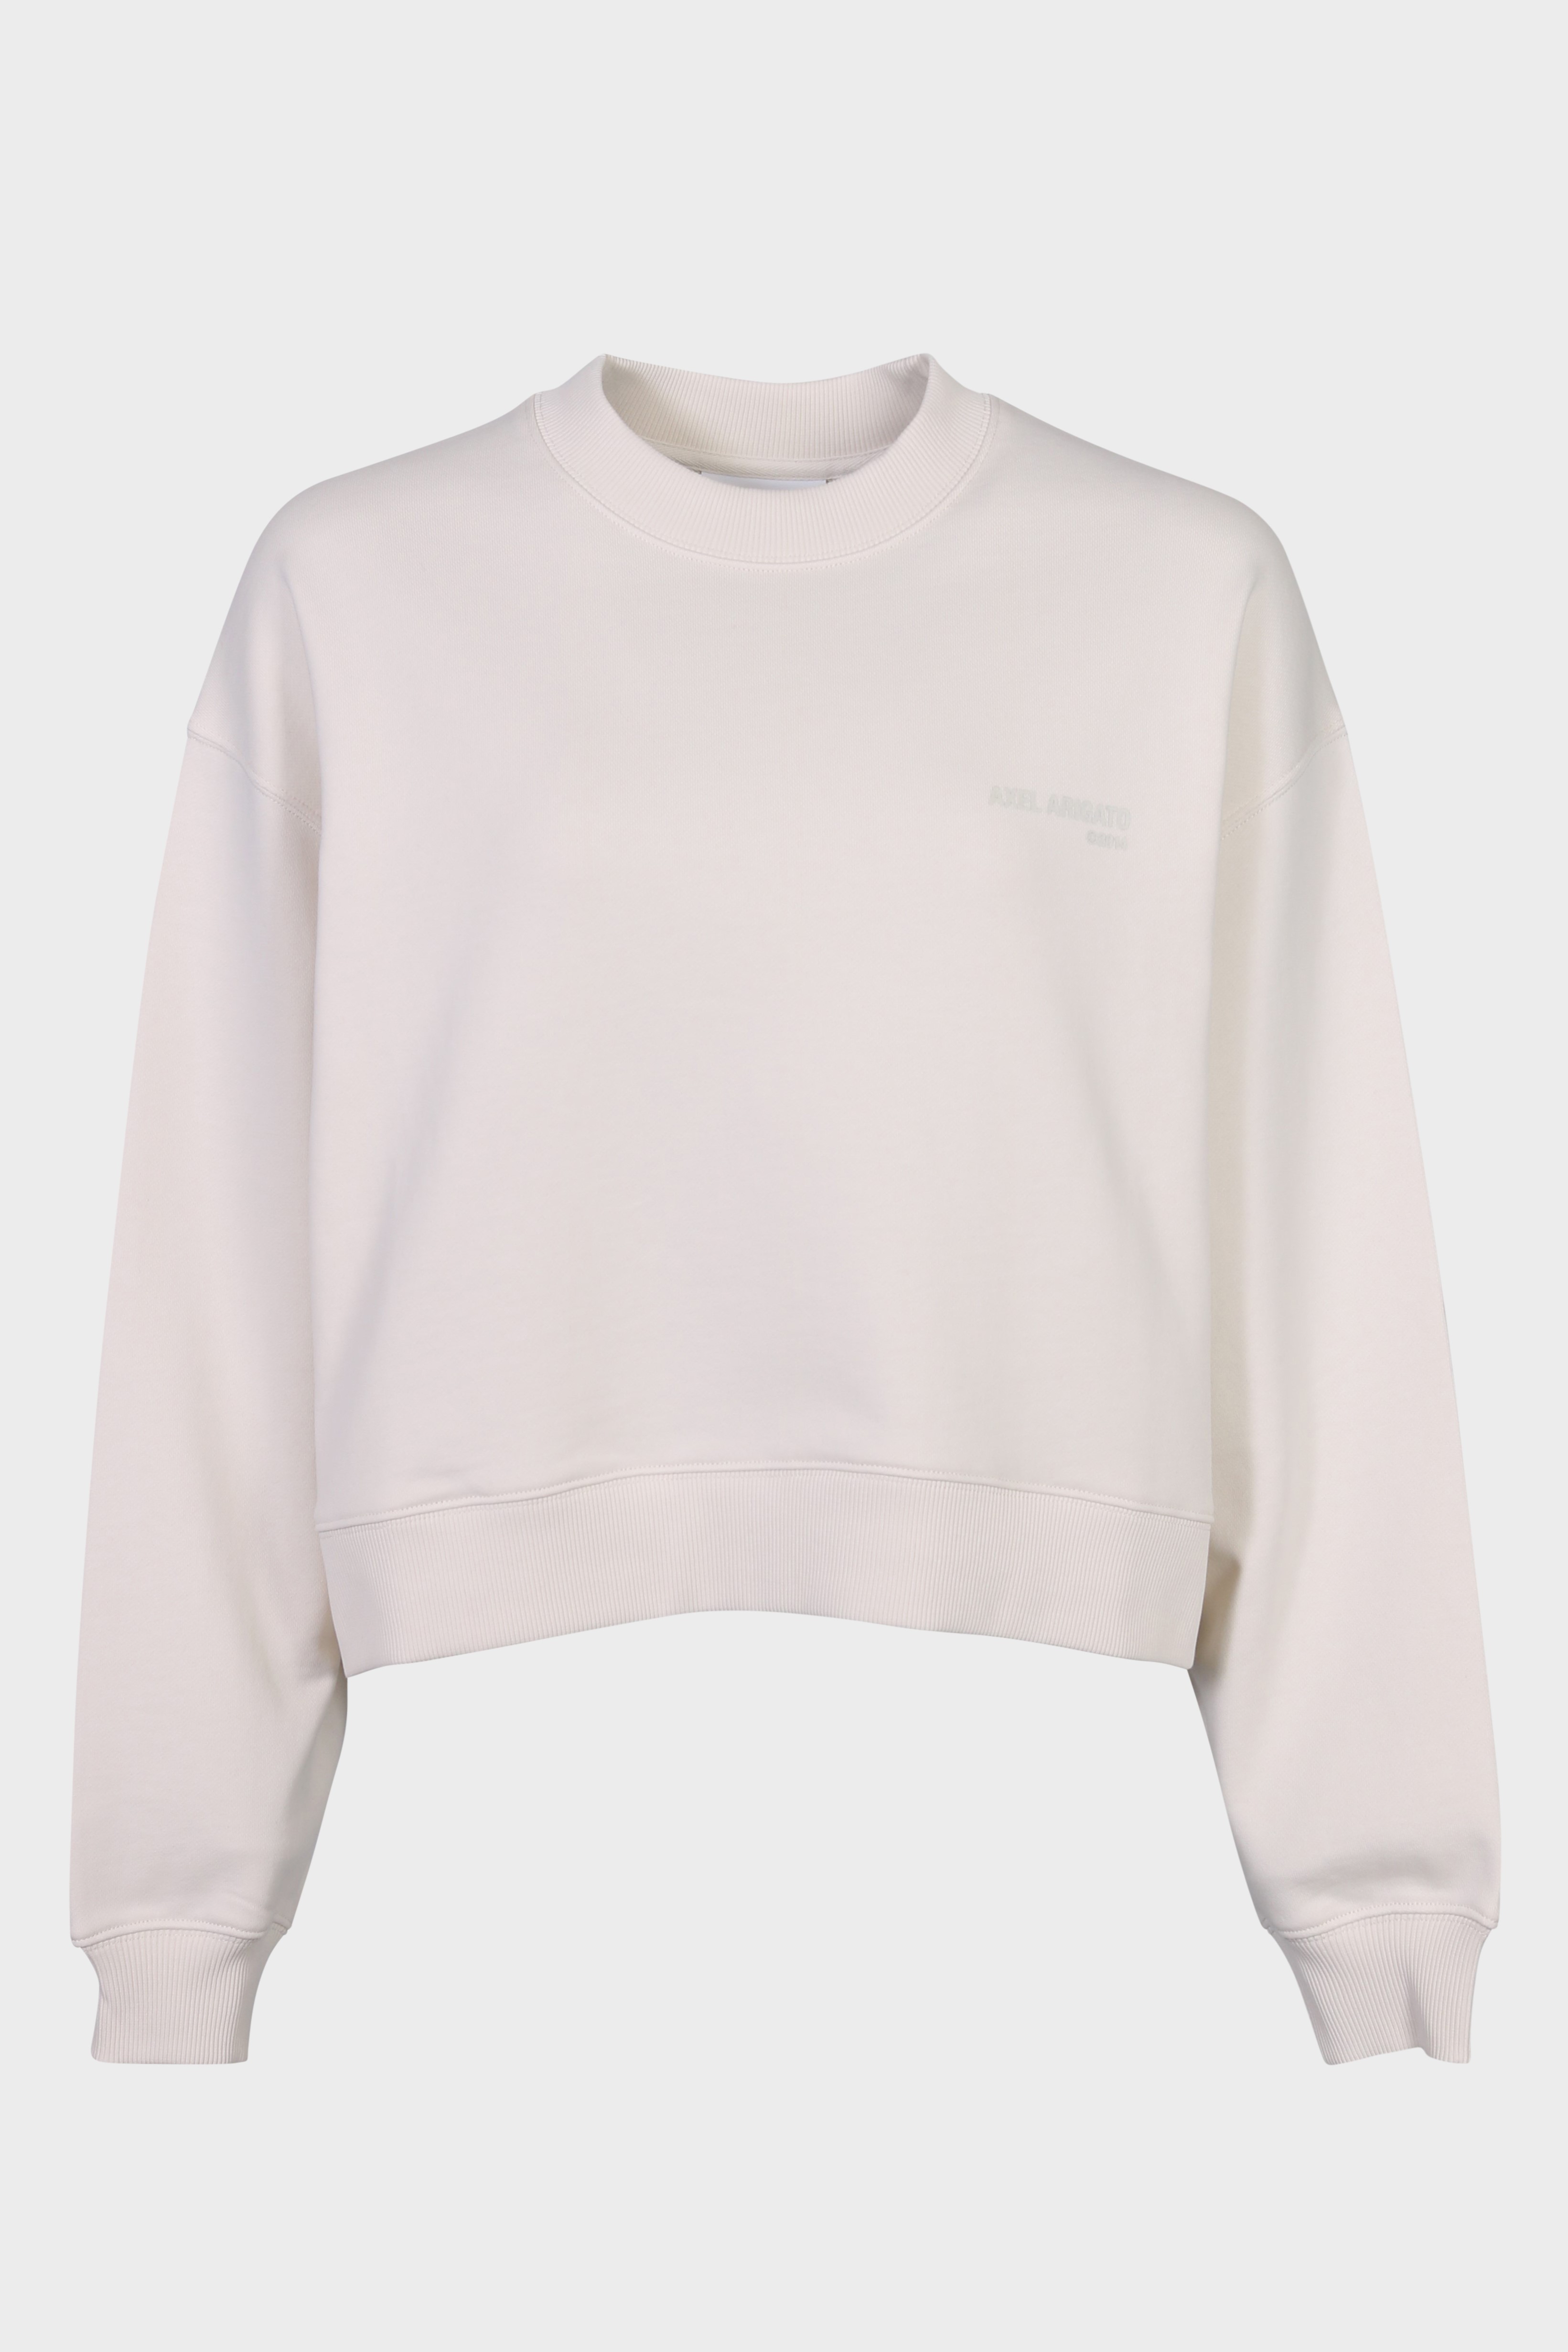 AXEL ARIGATO Legacy Sweatshirt in Off White M